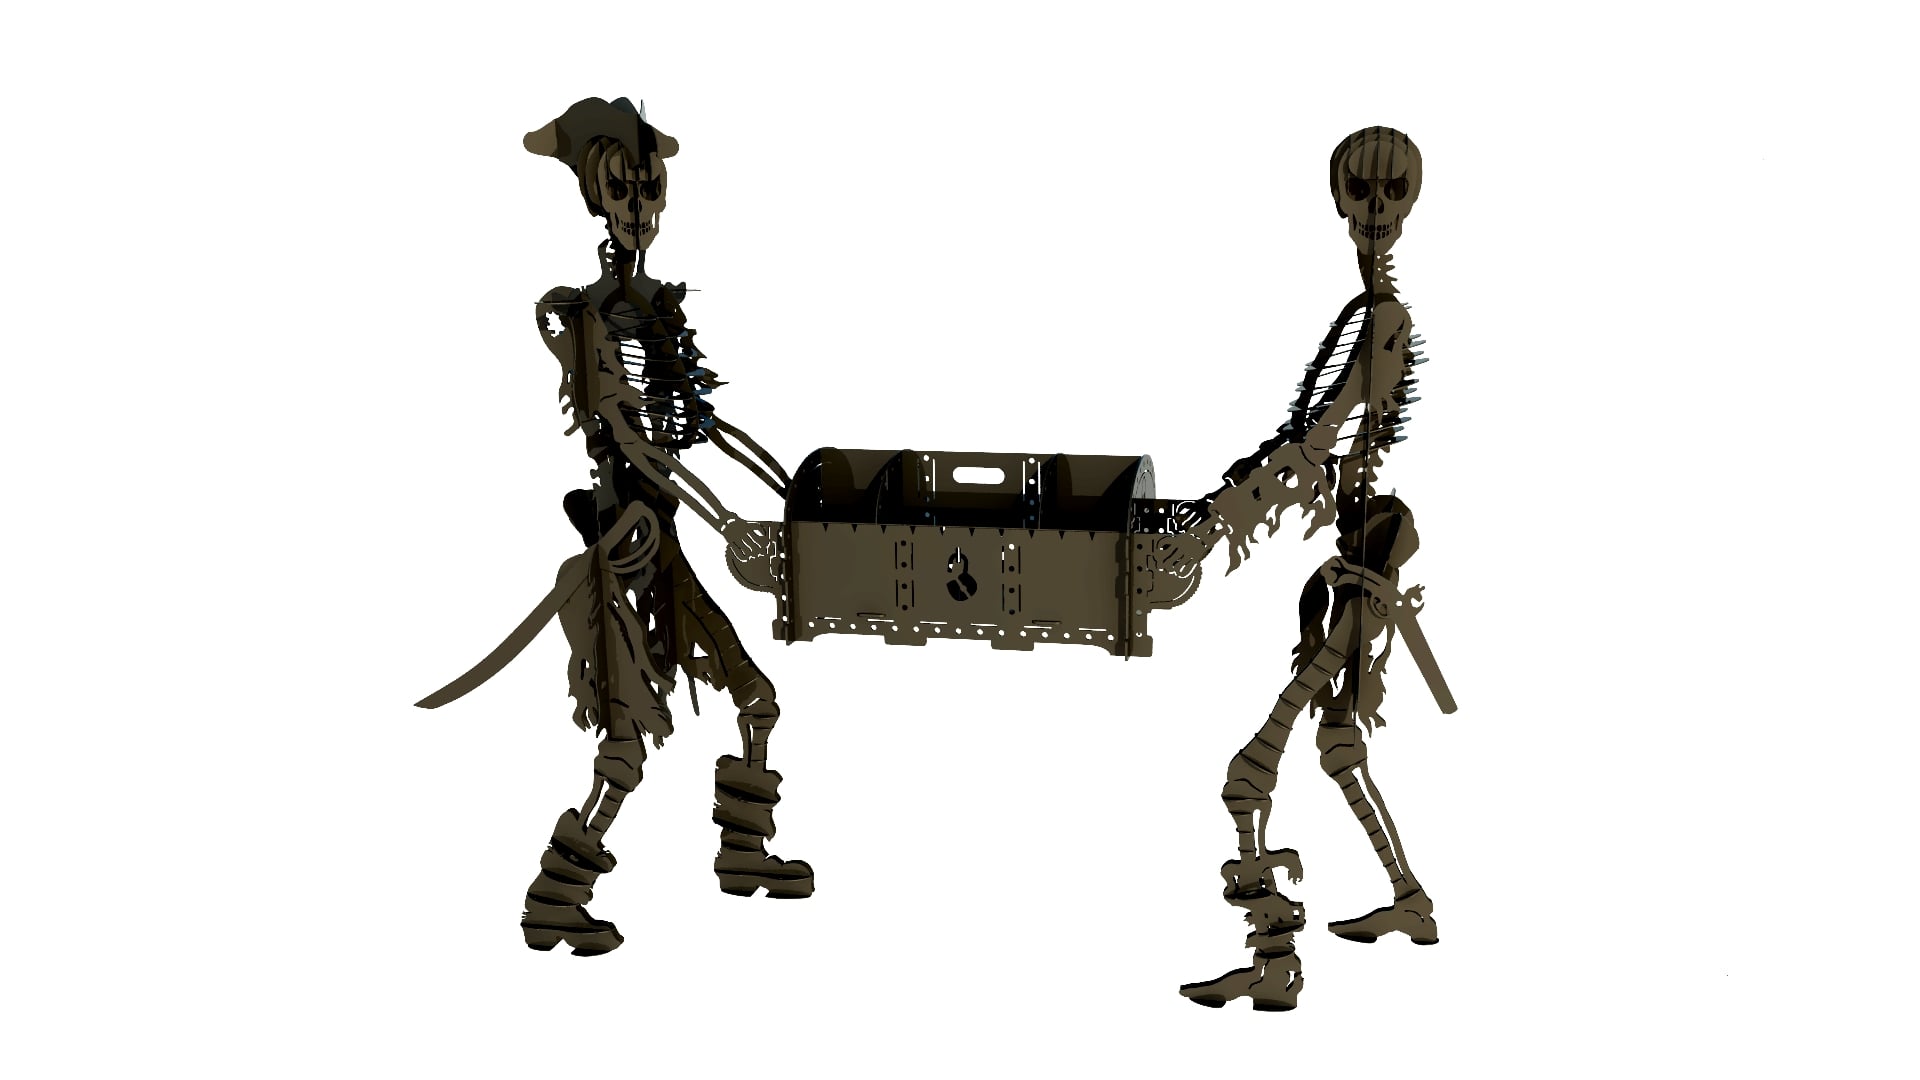 Мангал скелеты (скелеты держат мангал)